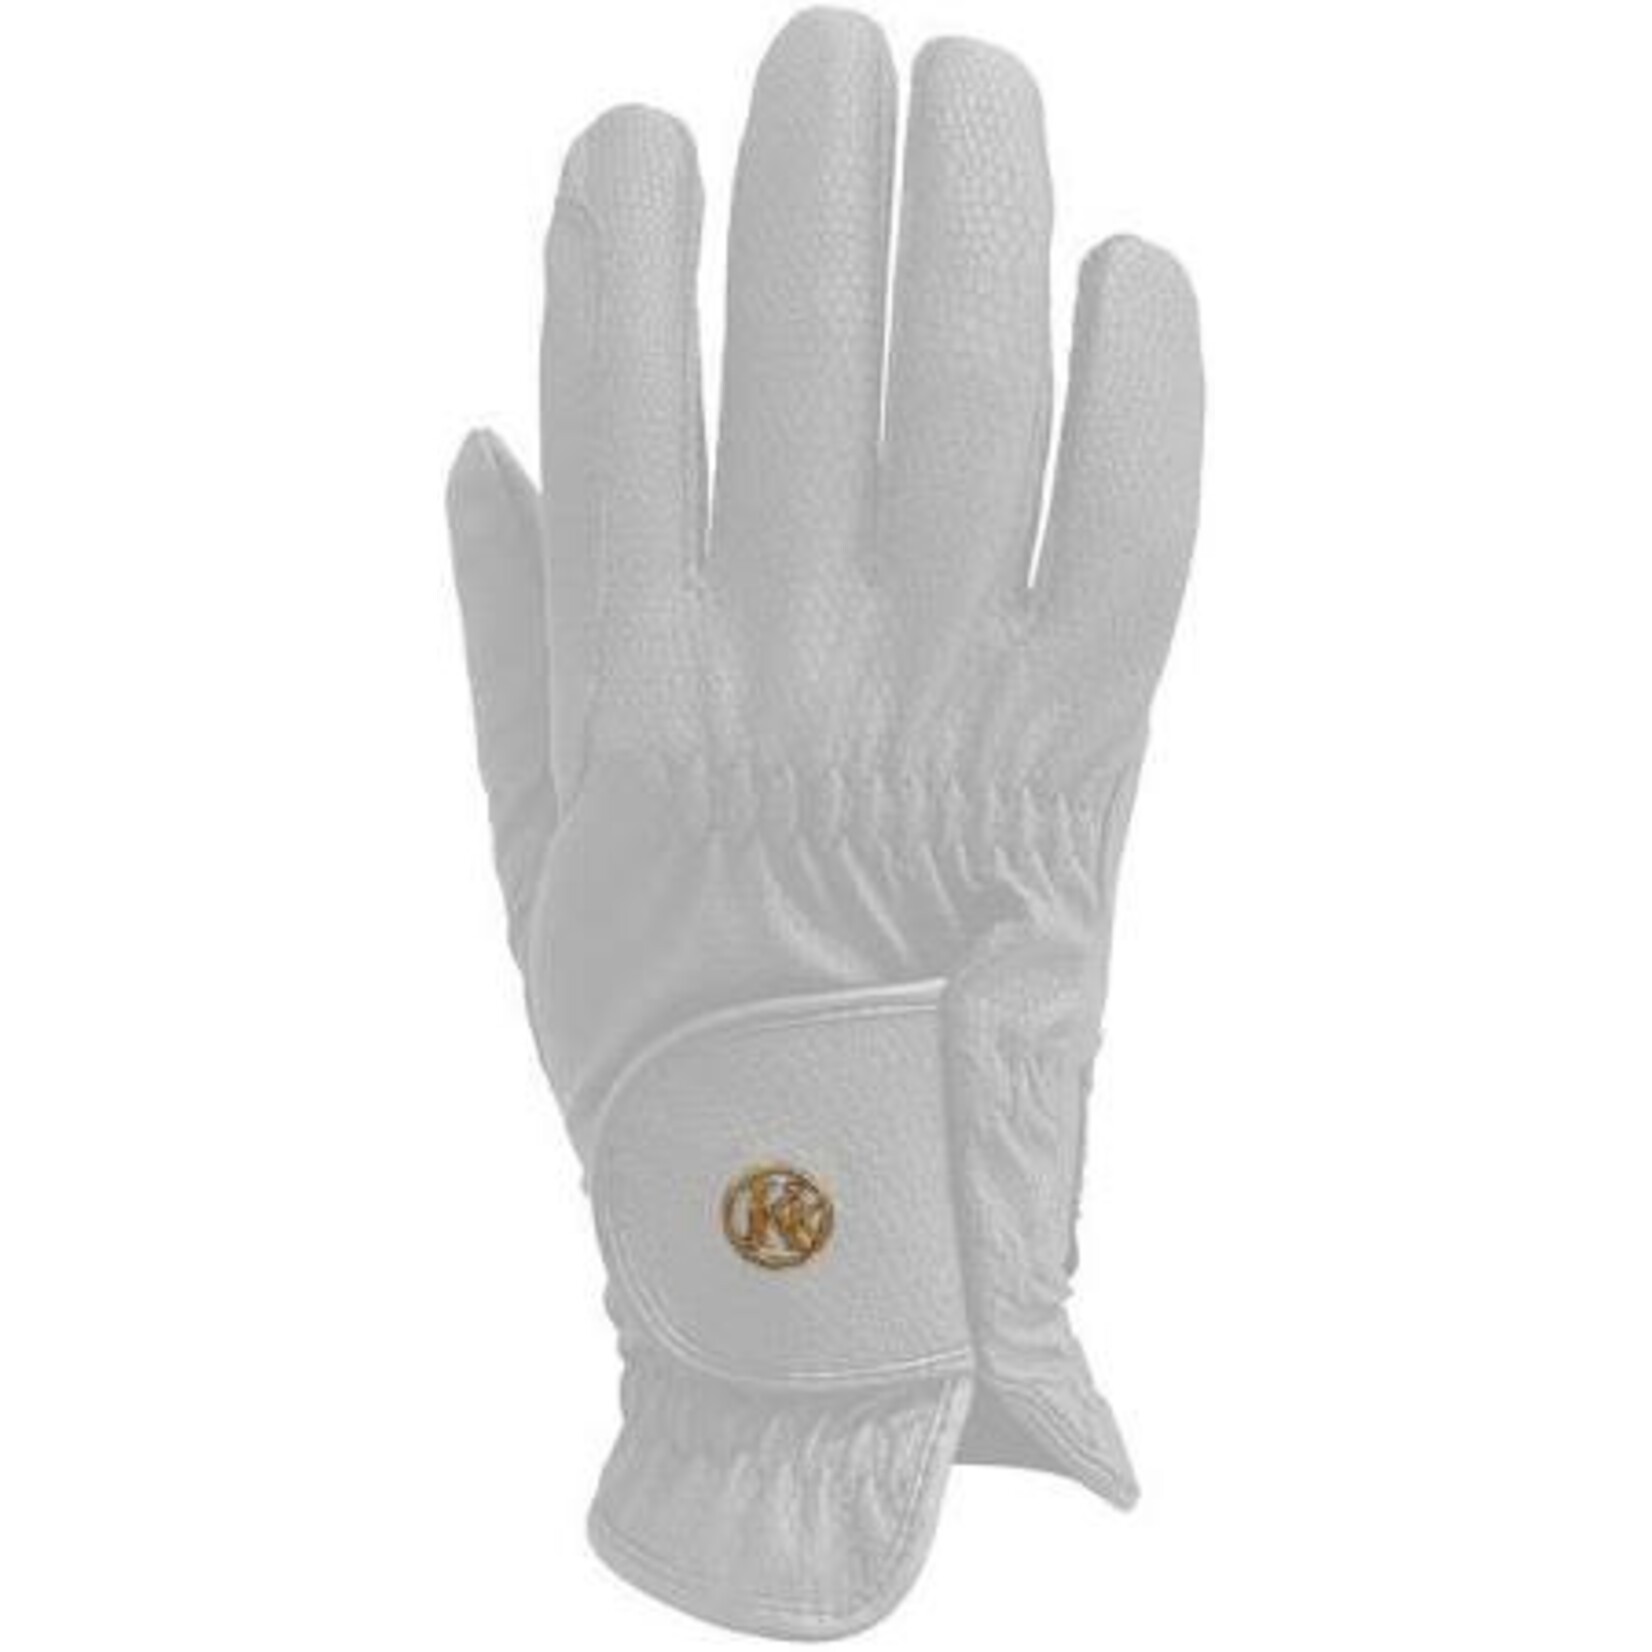 Kunkle Kunkle Premium Show Gloves